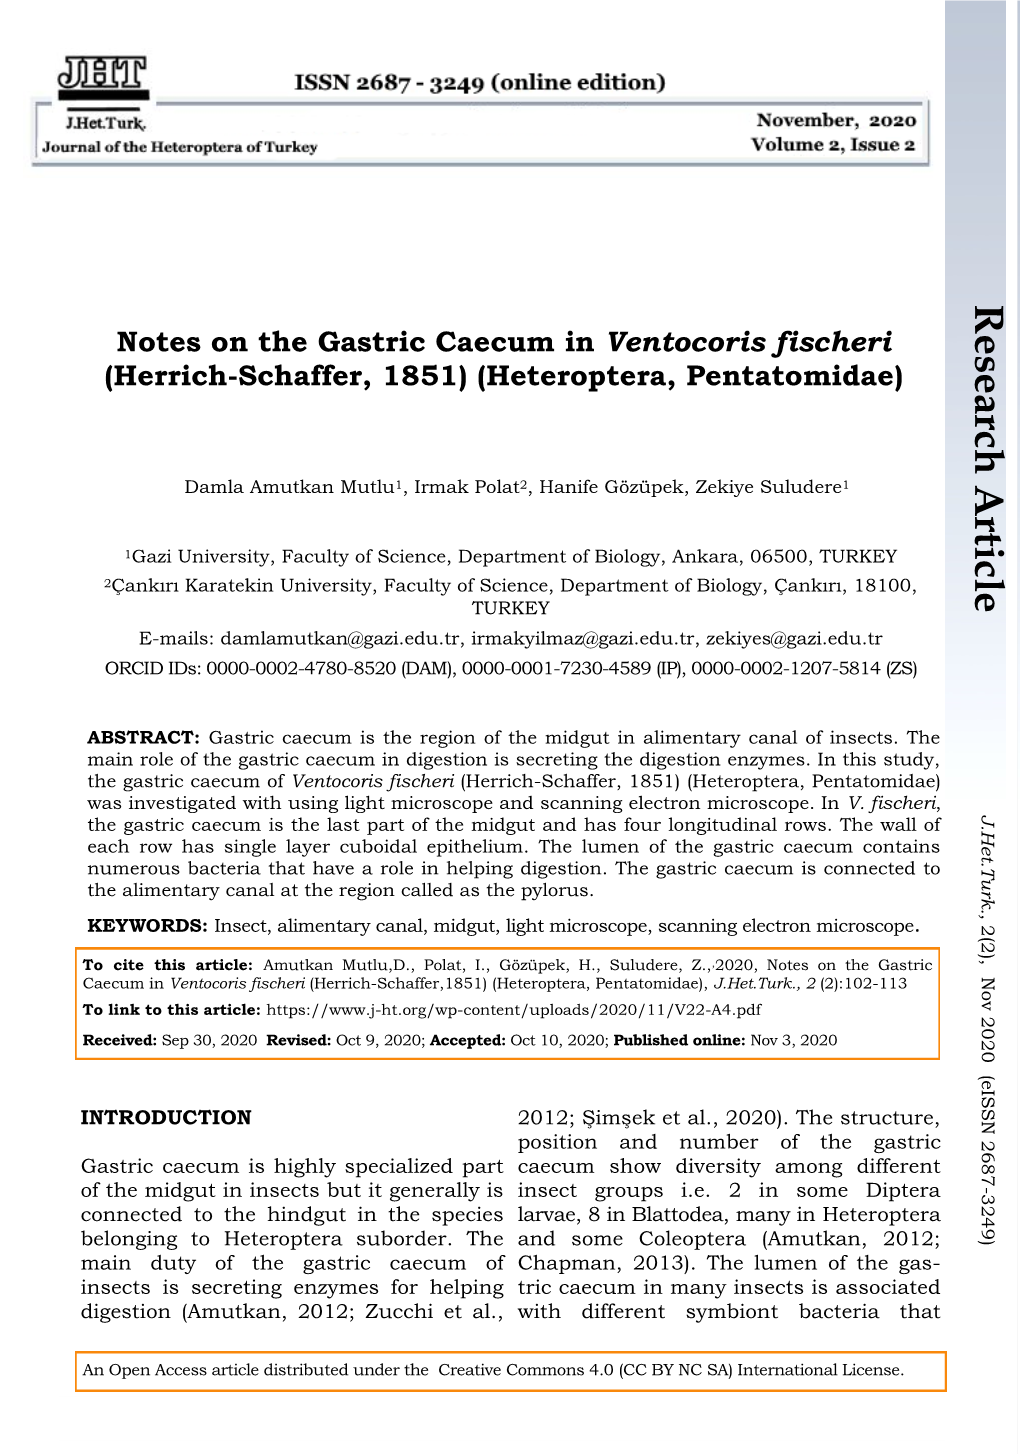 Research Article Notes on the Gastric Caecum in Ventocoris Fischeri (Herrich-Schaffer, 1851) (Heteroptera, Pentatomidae)